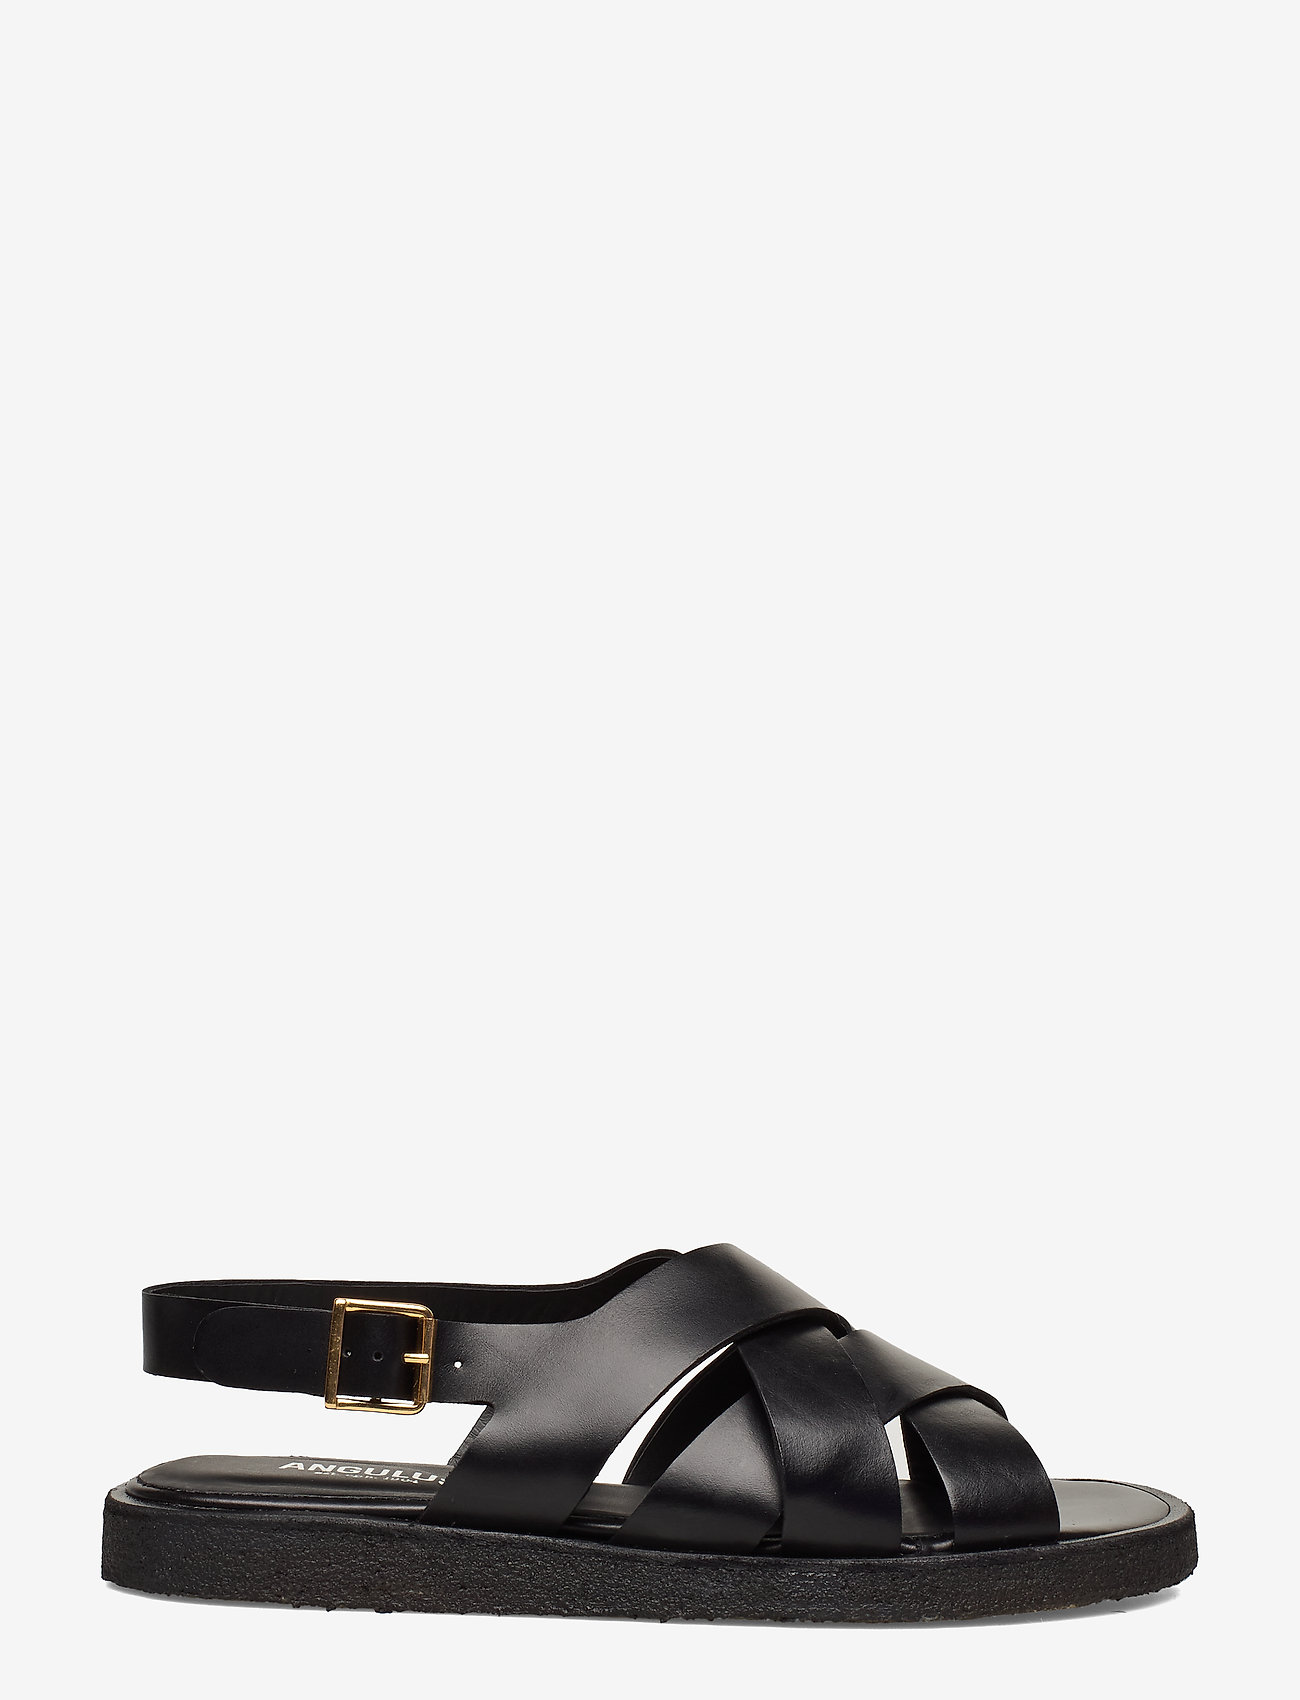 ANGULUS - Sandals - flat - open toe - op - flat sandals - 1835 black - 1